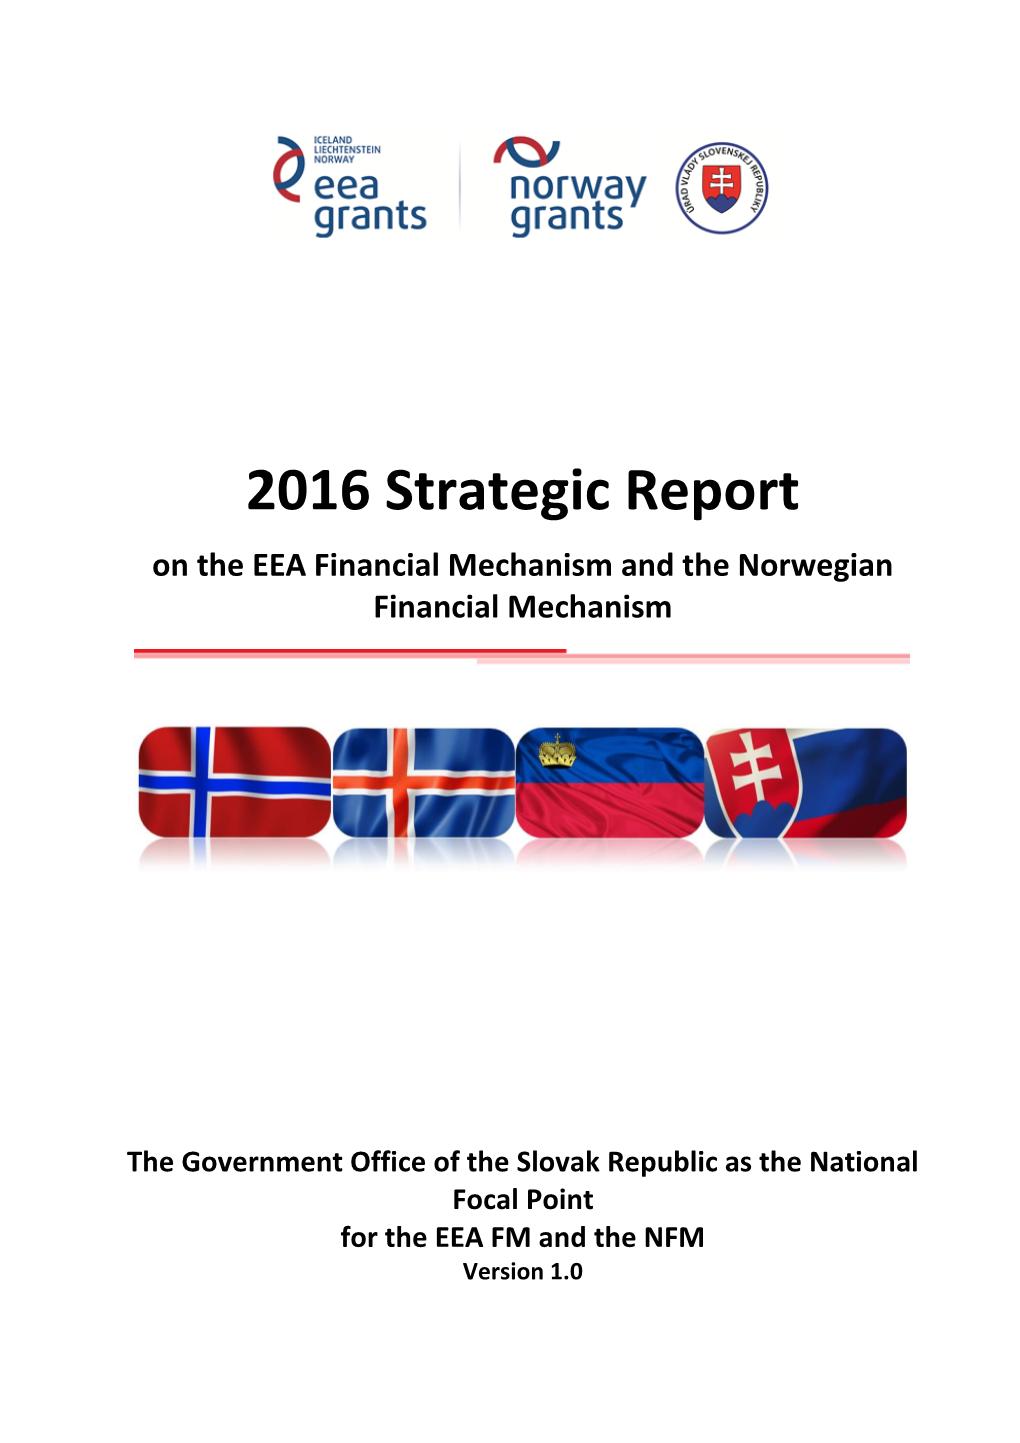 2016 Strategic Report on the EEA Financial Mechanism and the Norwegian Financial Mechanism